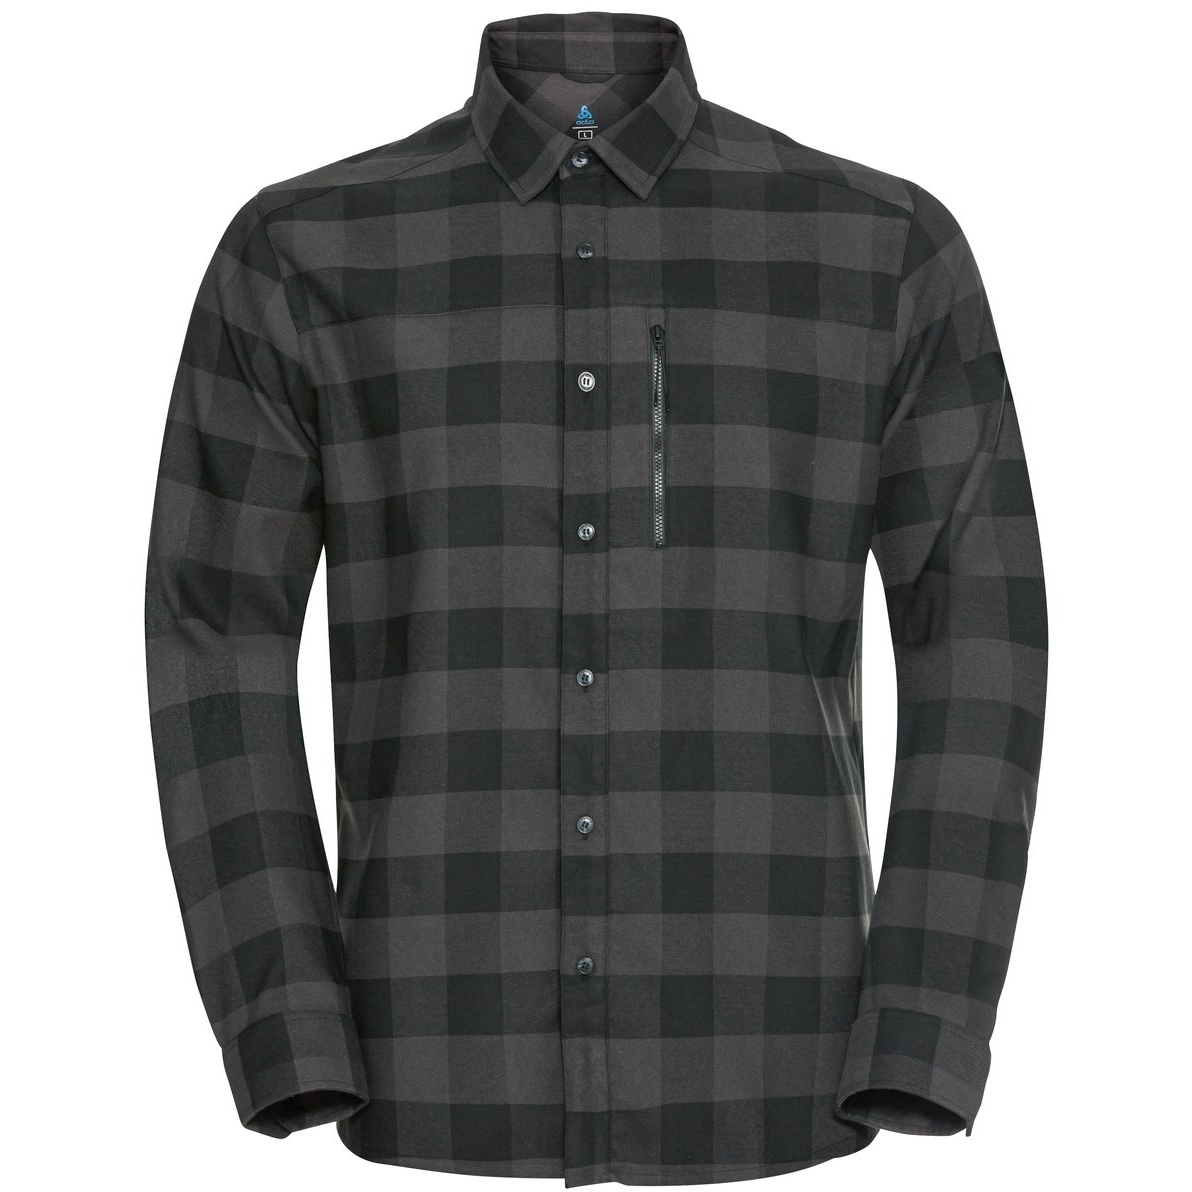 Picture of Odlo Halden Long Sleeve Shirt Men - black - new odlo graphite grey